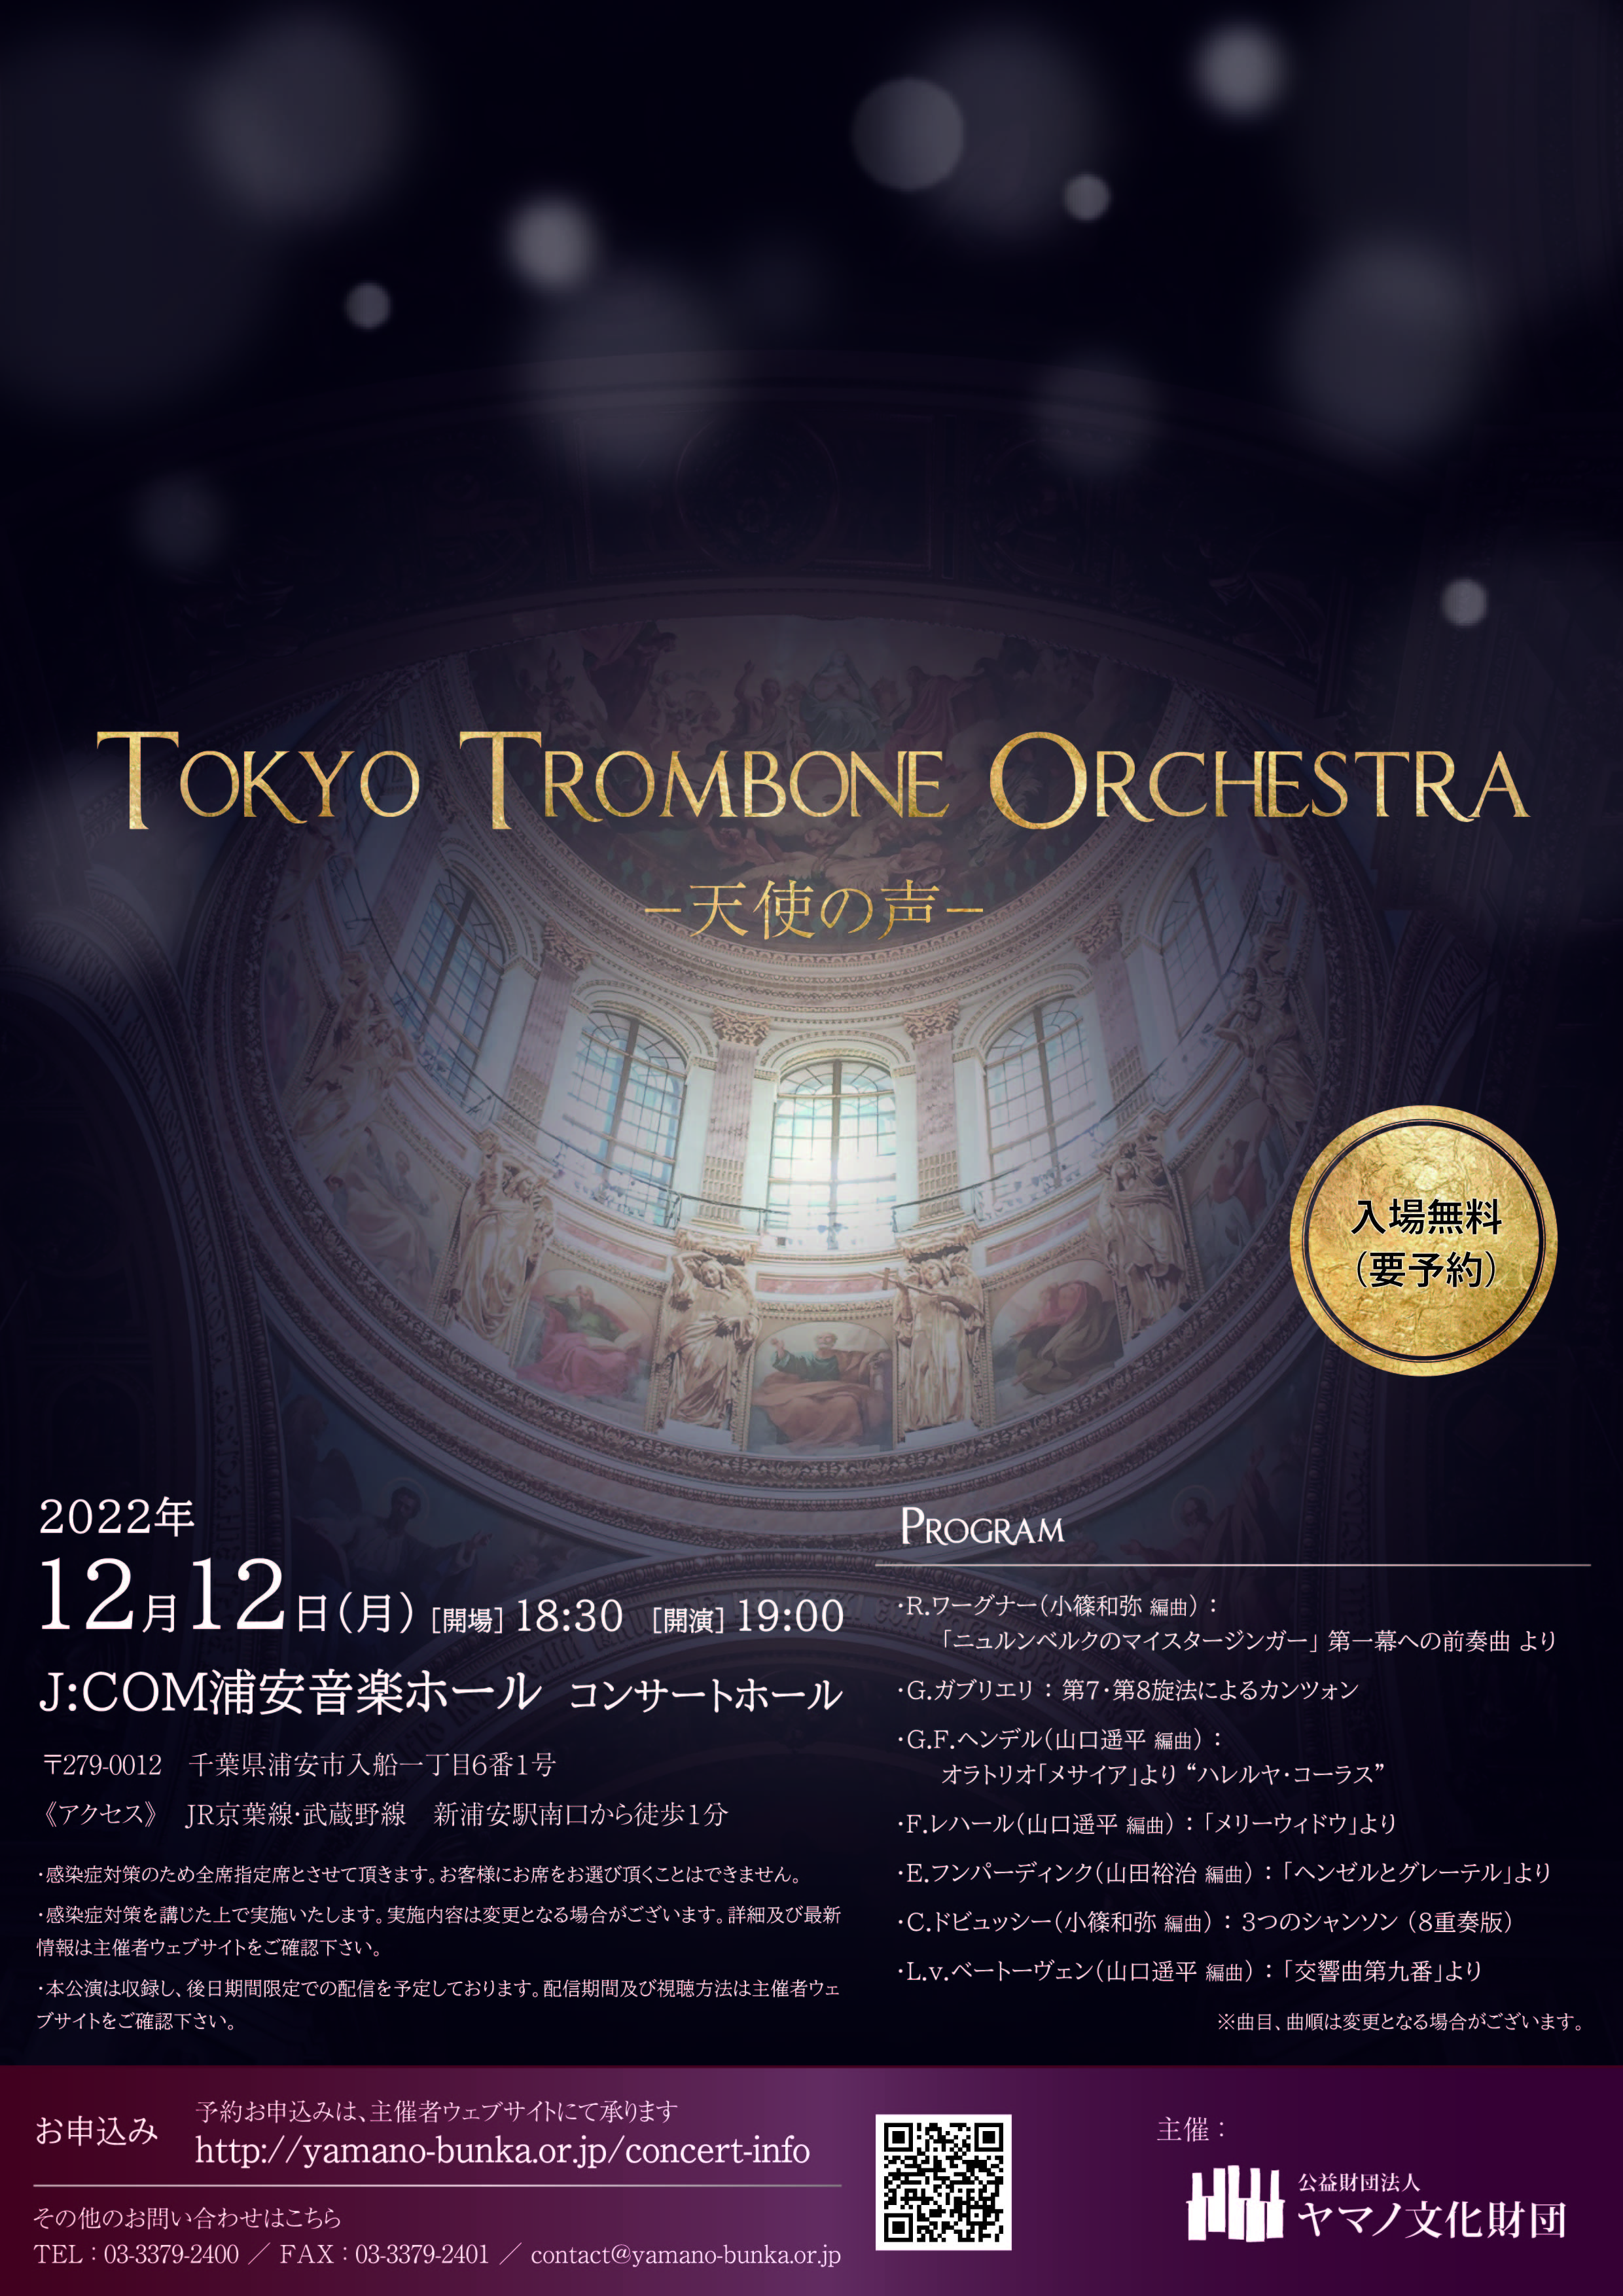 Tokyo Trombone Orchestra